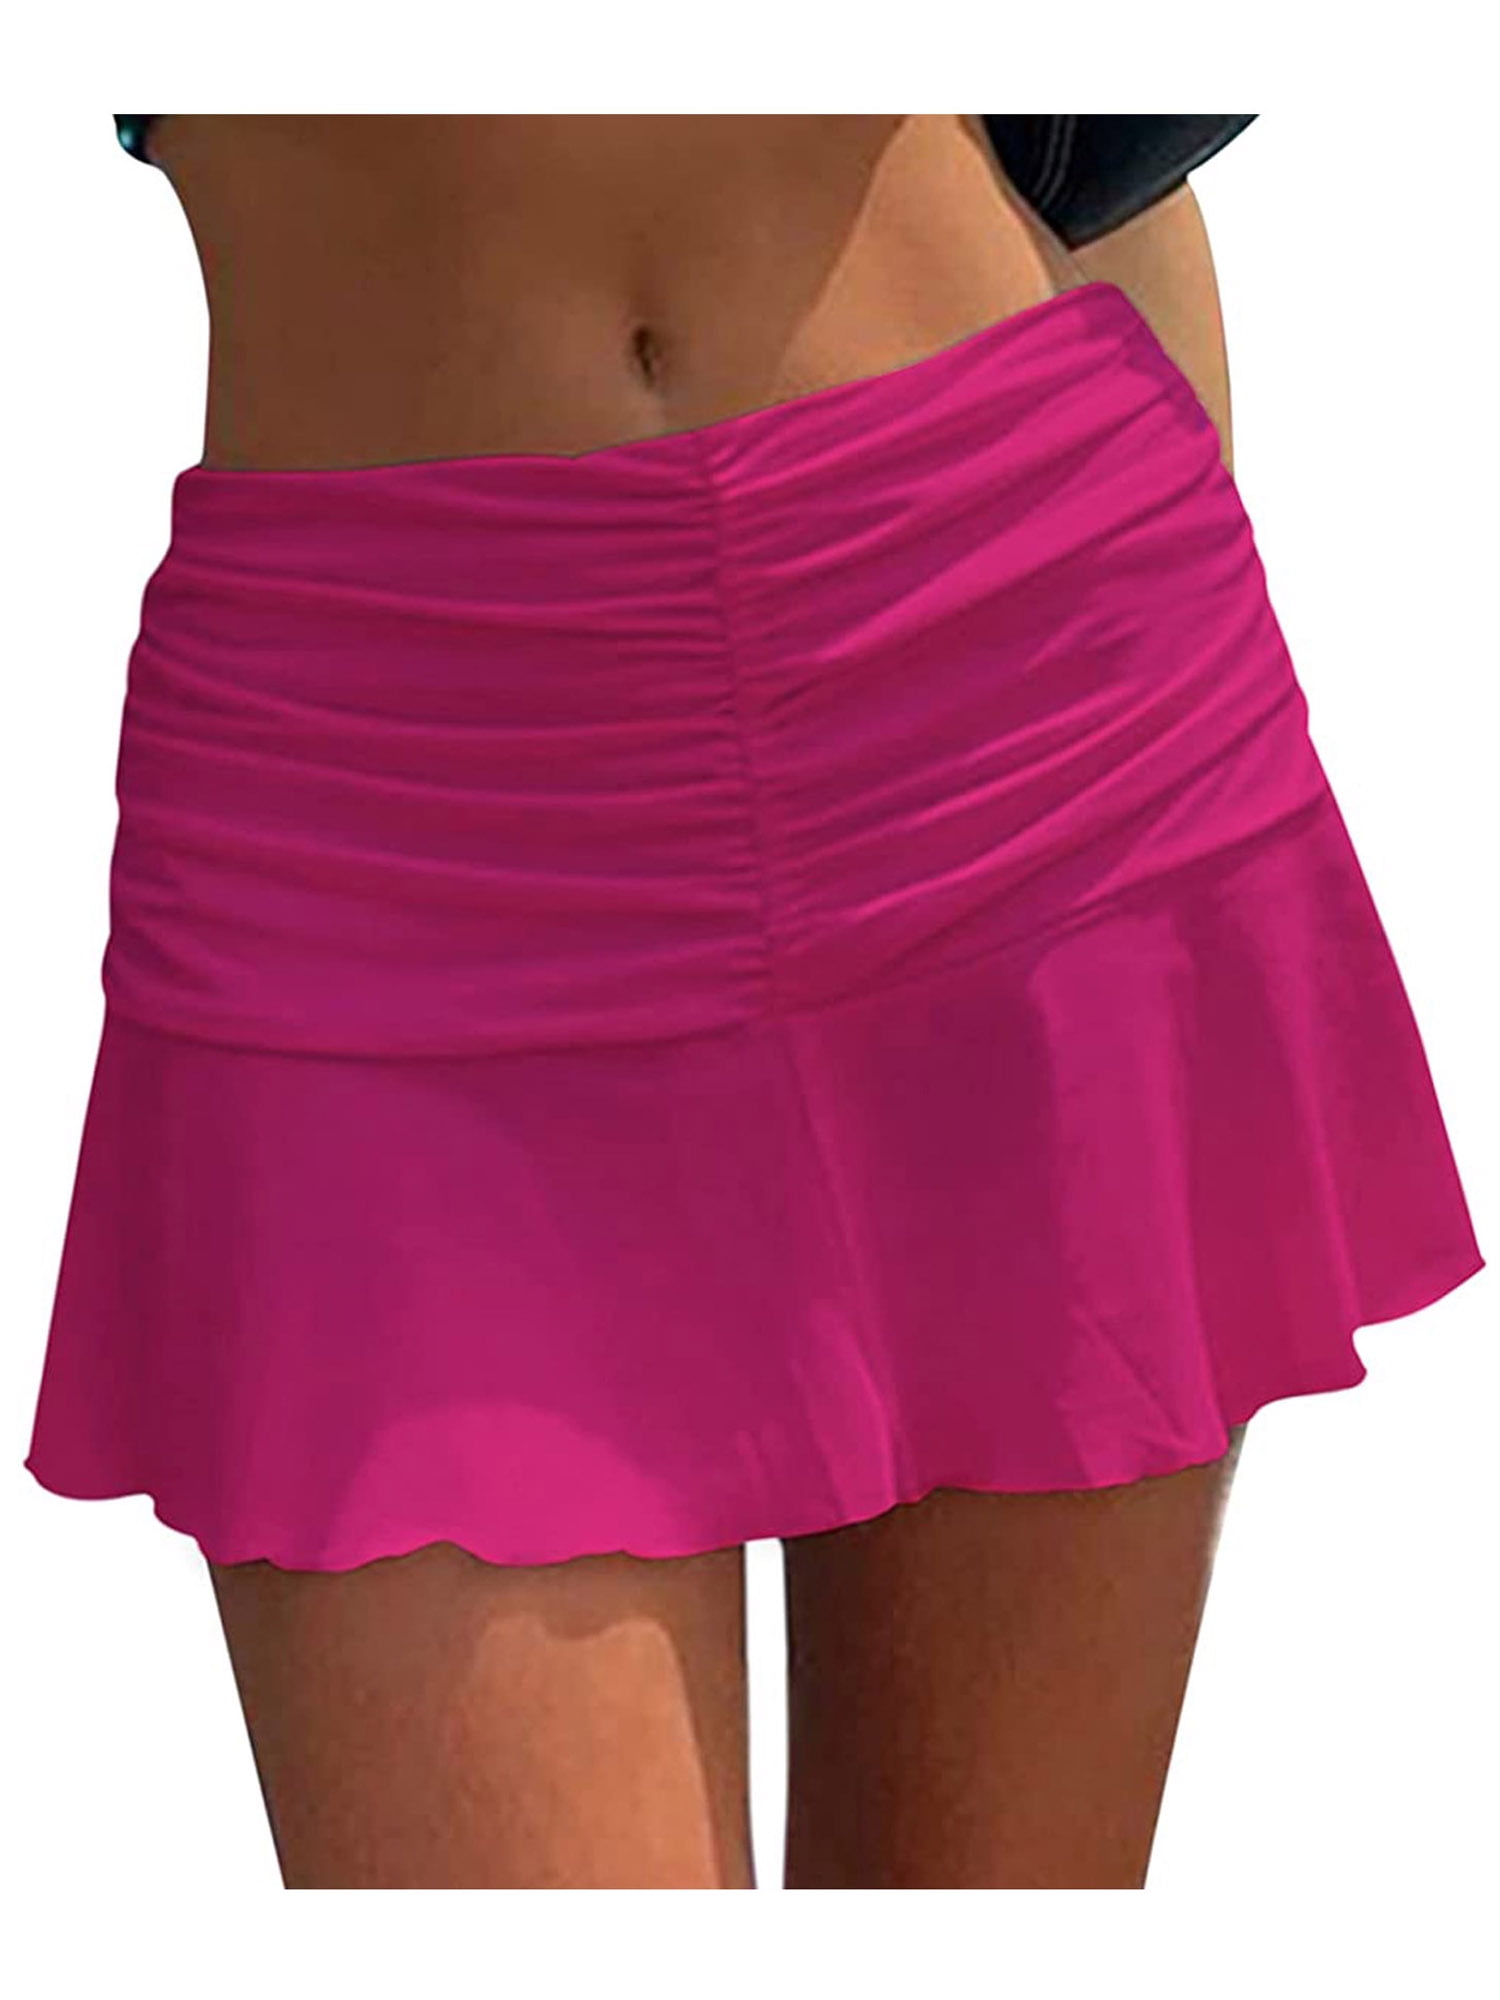 Women Ruched Ruffle Mini Skirt High Waisted Stretch Pleated Tennis Skort A-Line E-Girl Short Skirts 